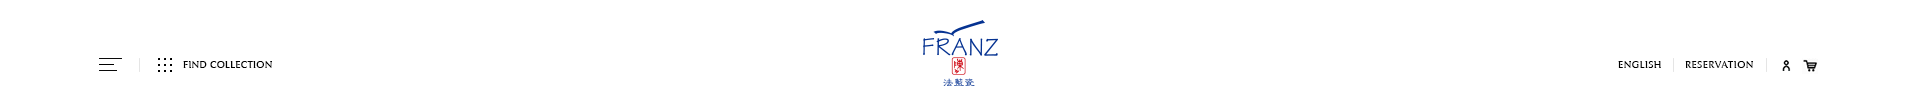 Franz image